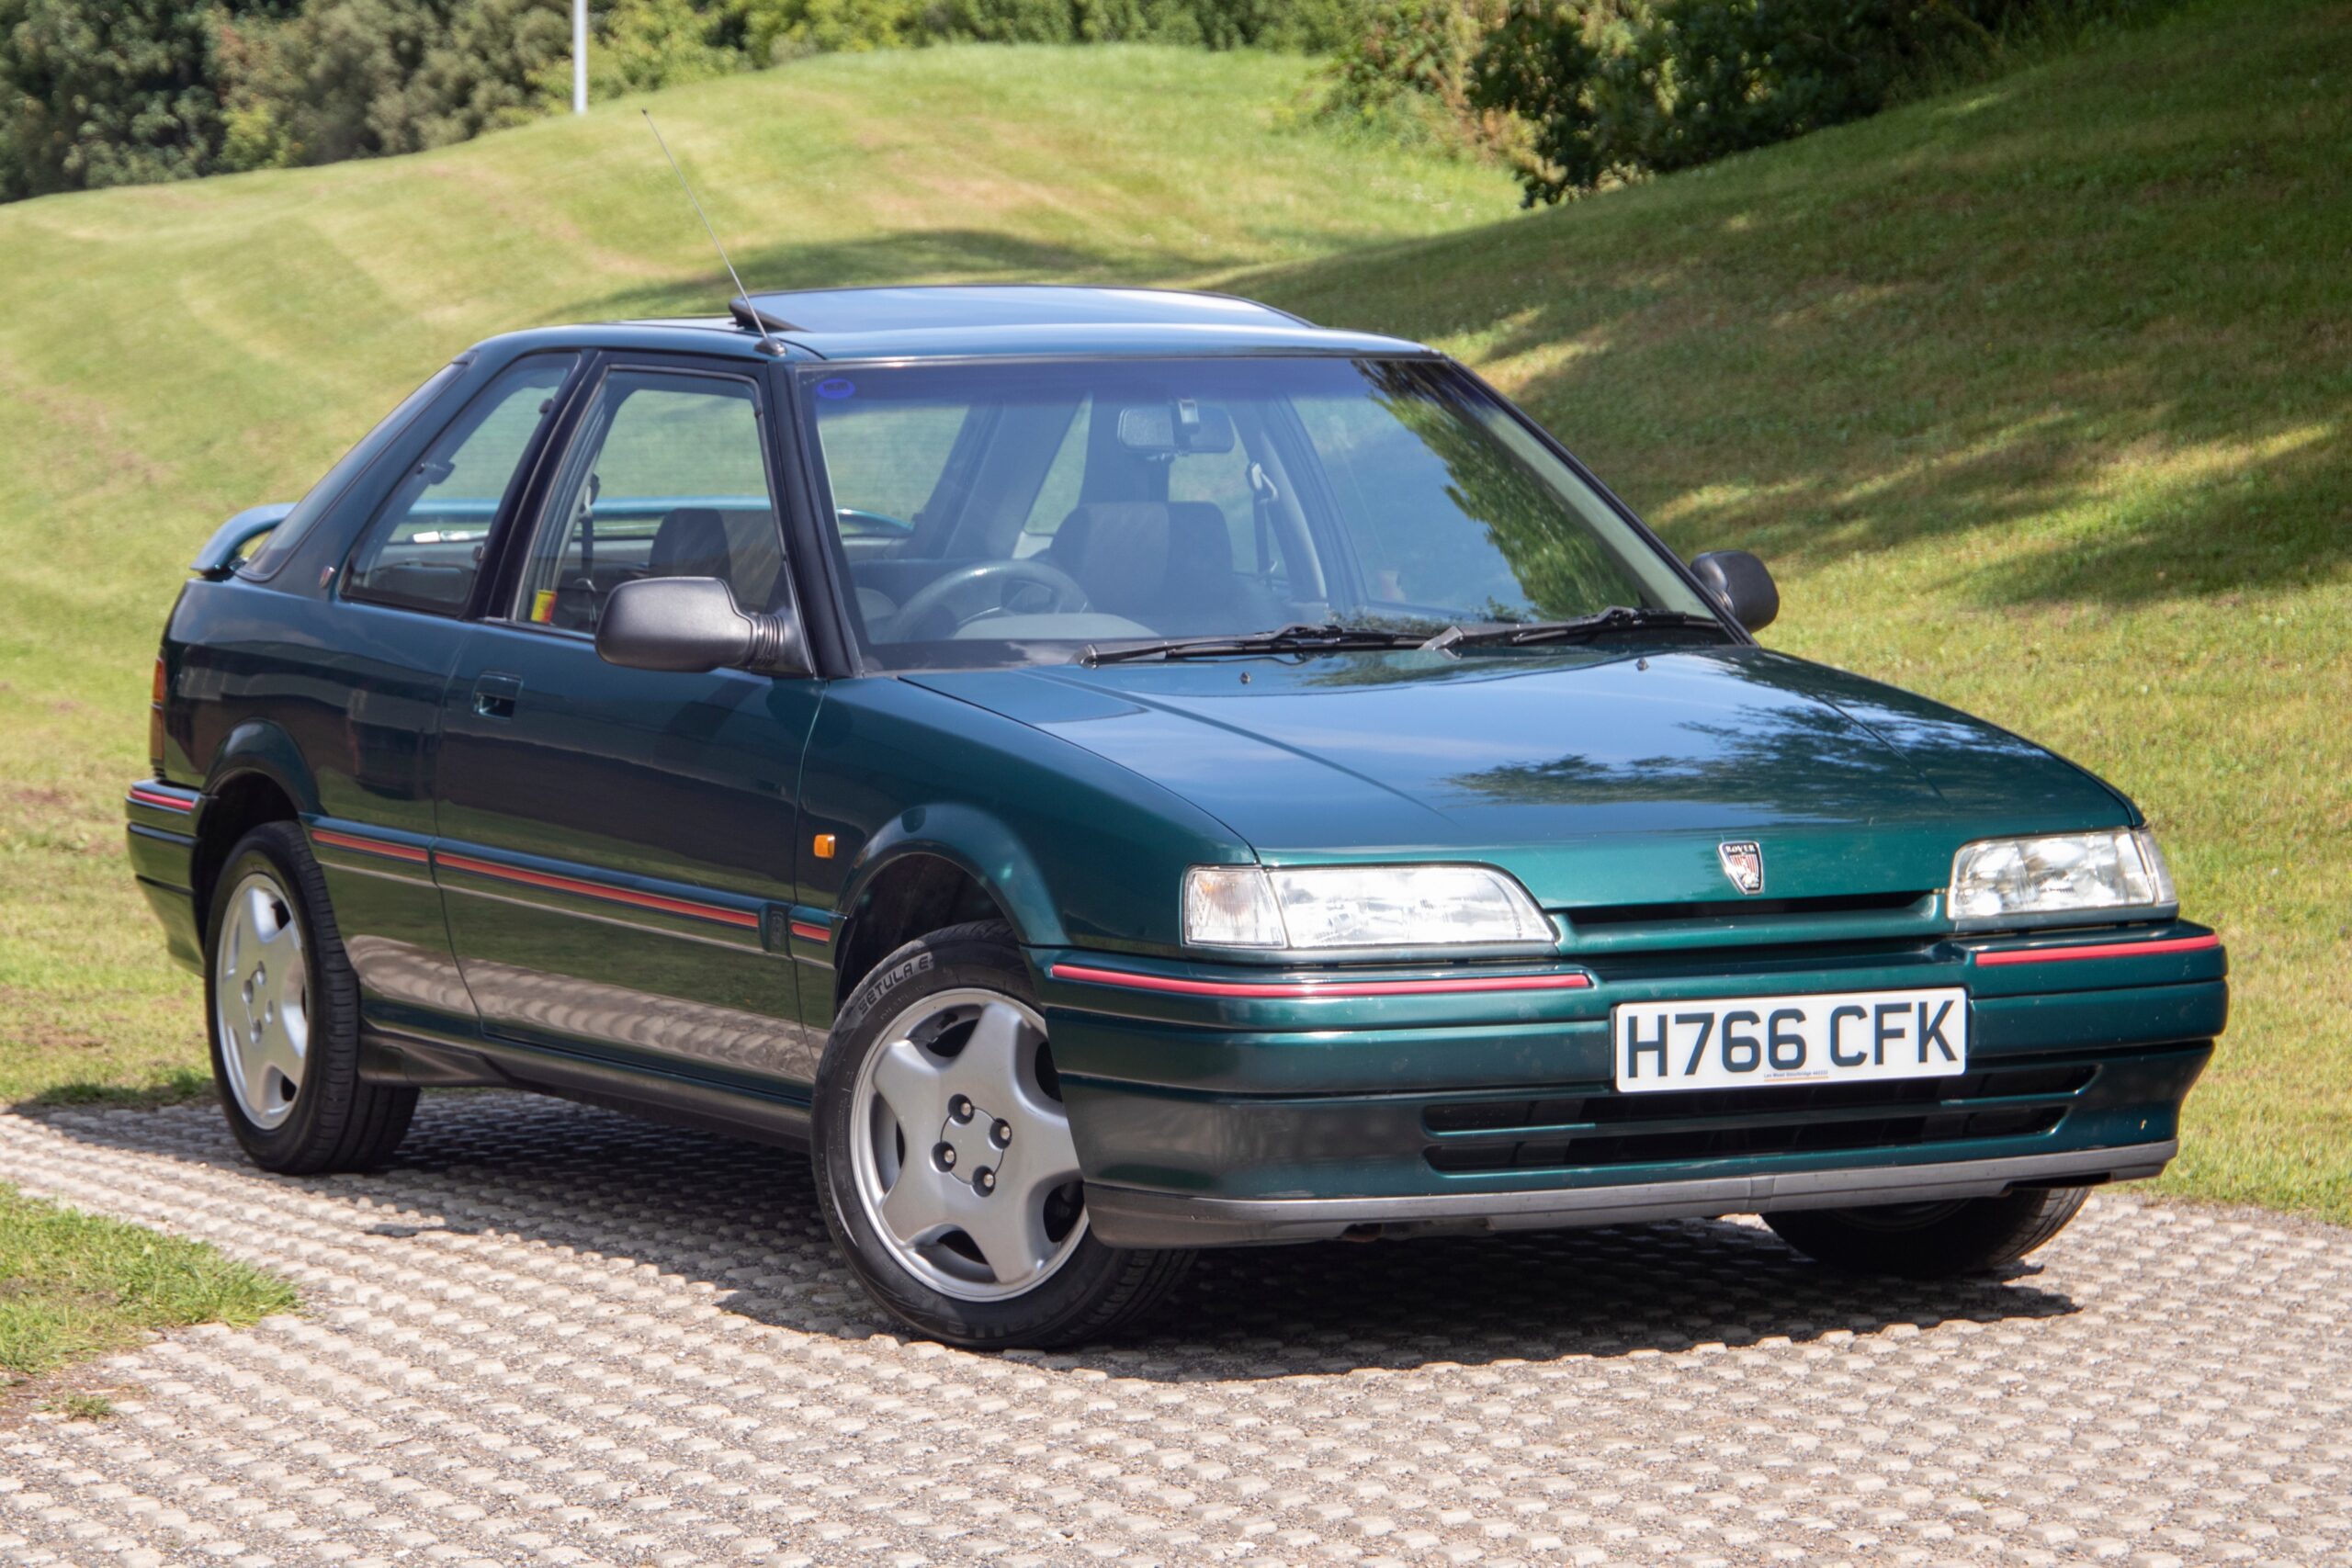 Rover 216 GTI : sportive en toute discrétion (1992-1995)